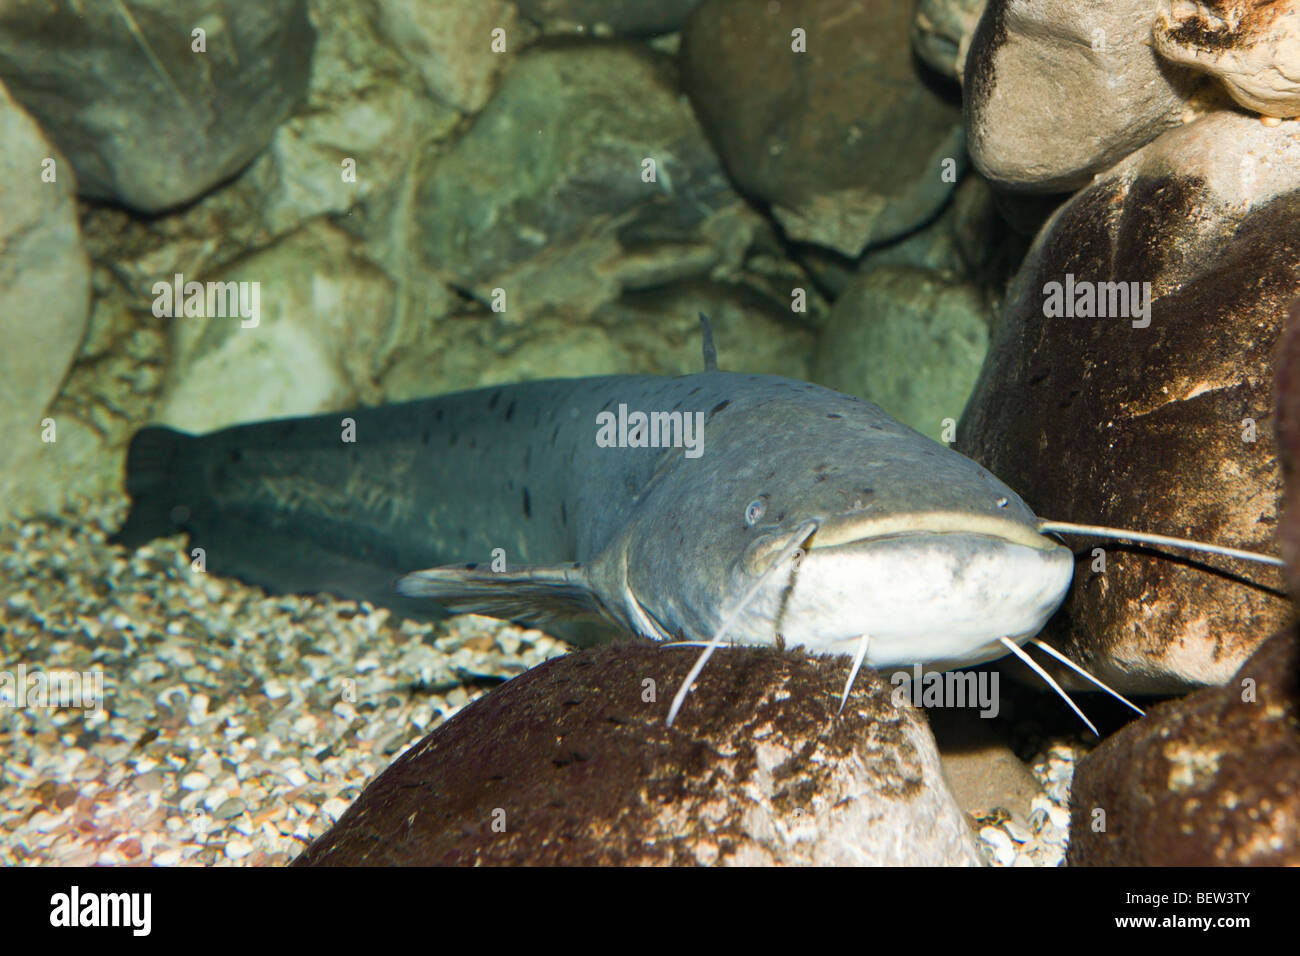 Wels Catfish, Siluris glanis, Donau, Germany Stock Photo